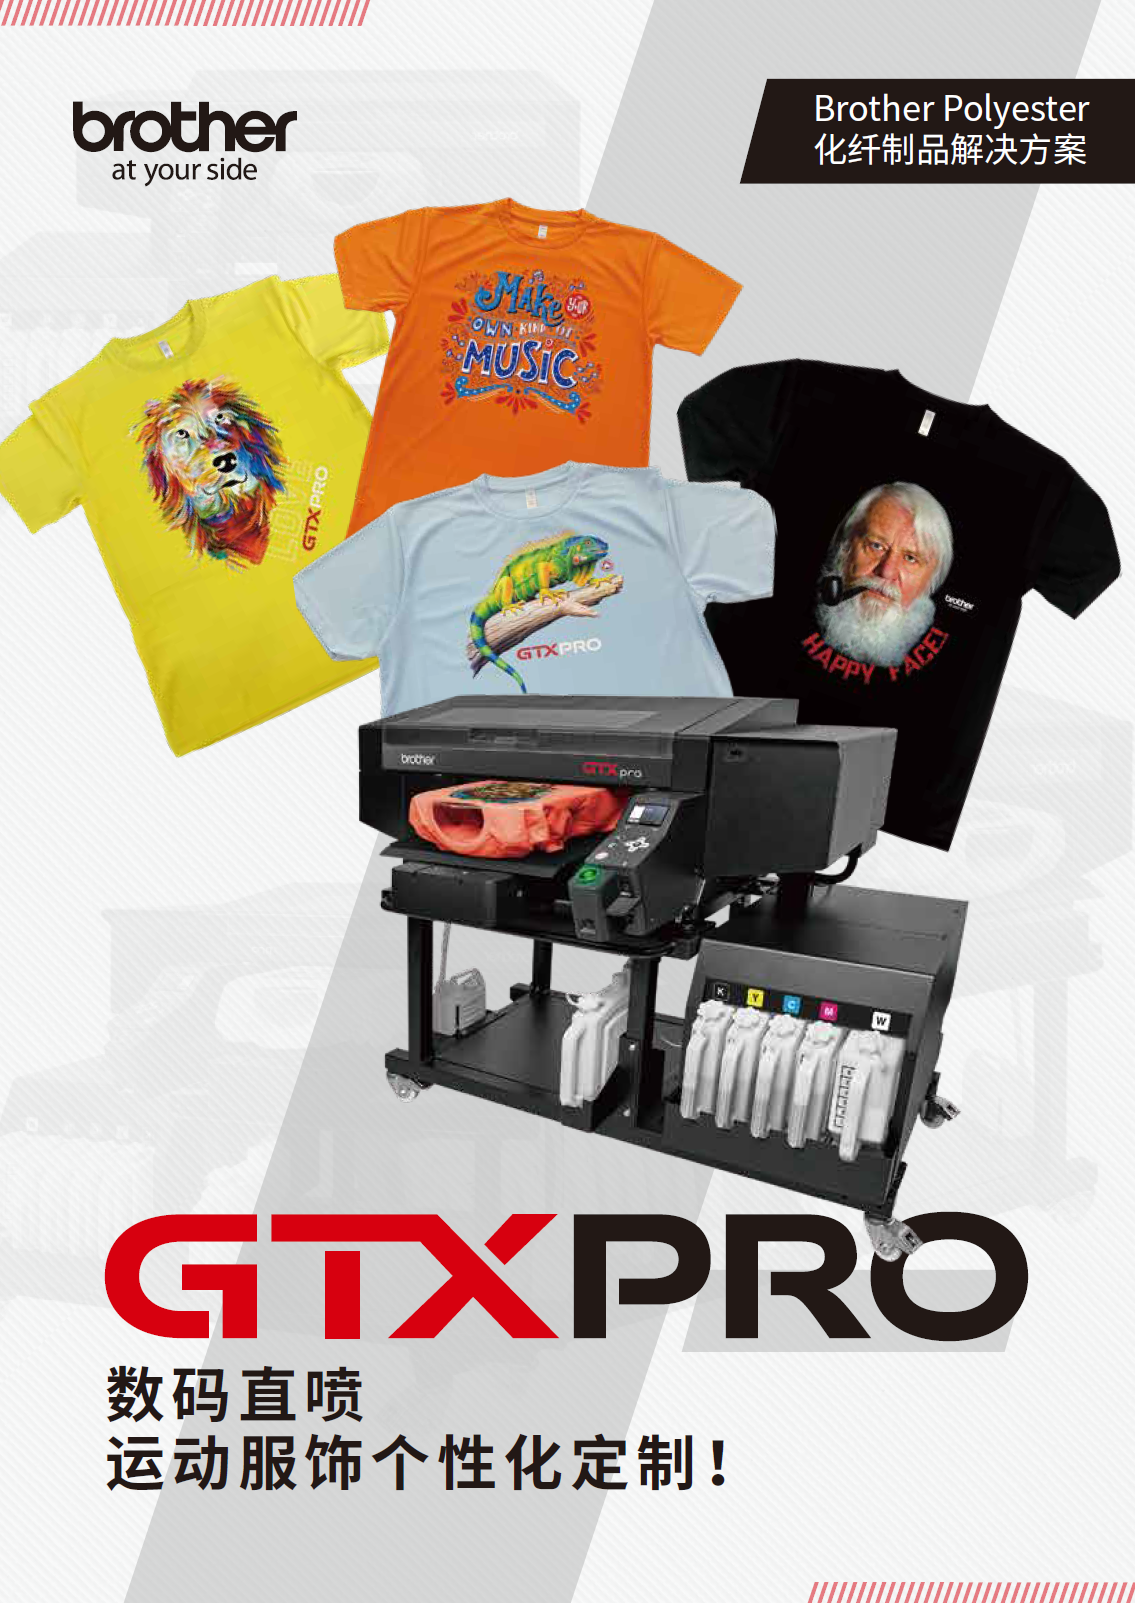 GTXPRO poly catalog